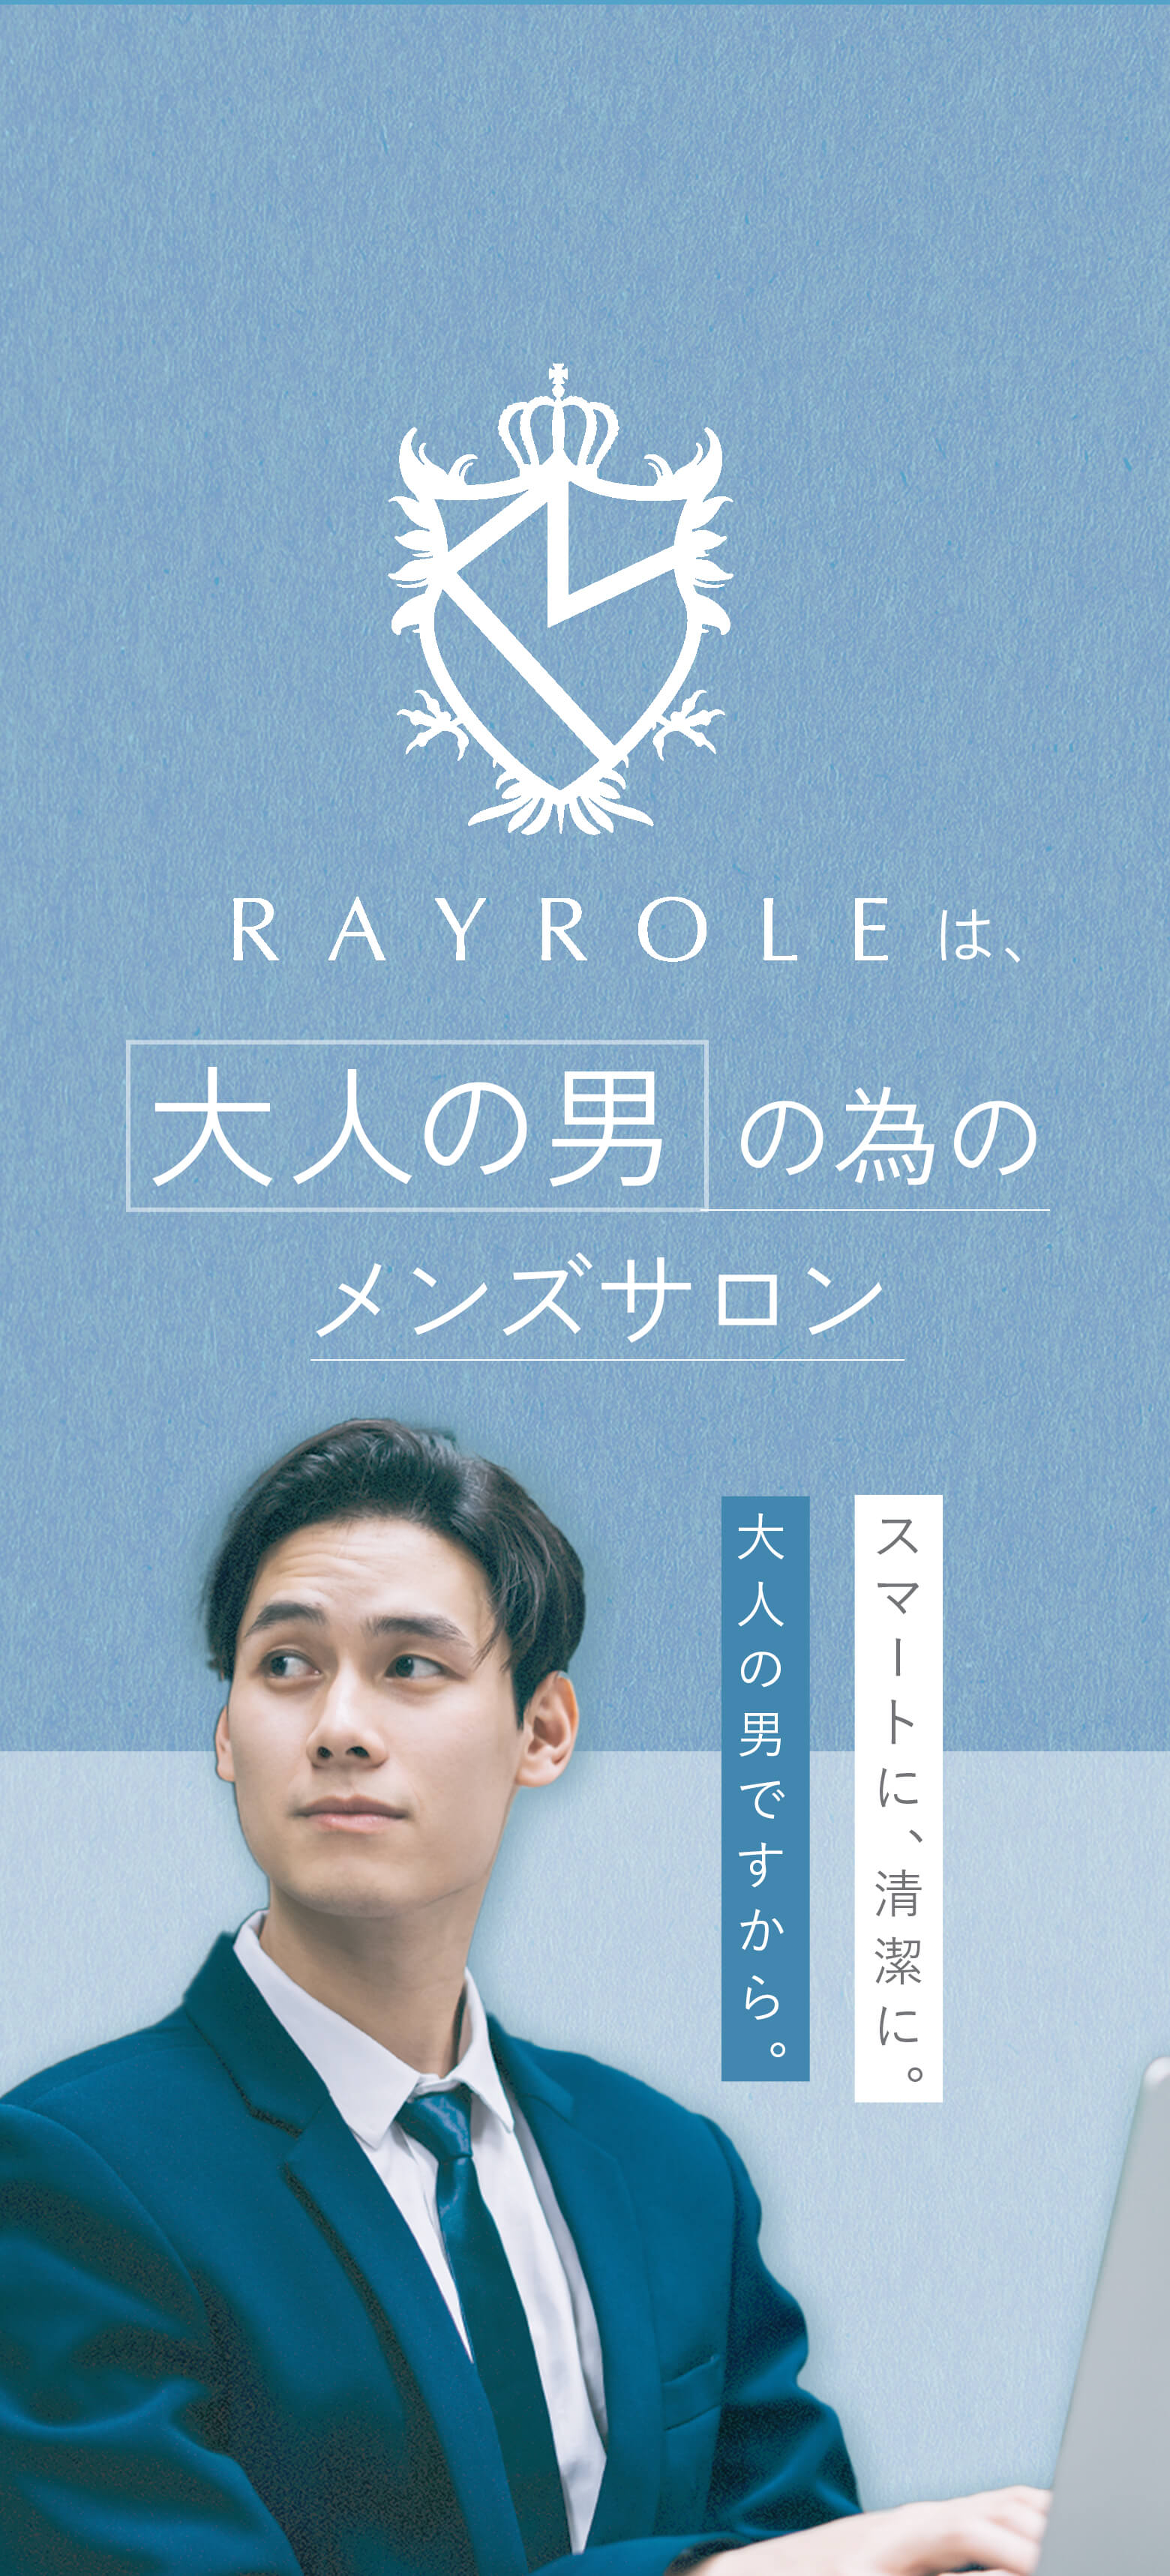 rayroleは大人の男のためのメンズサロン